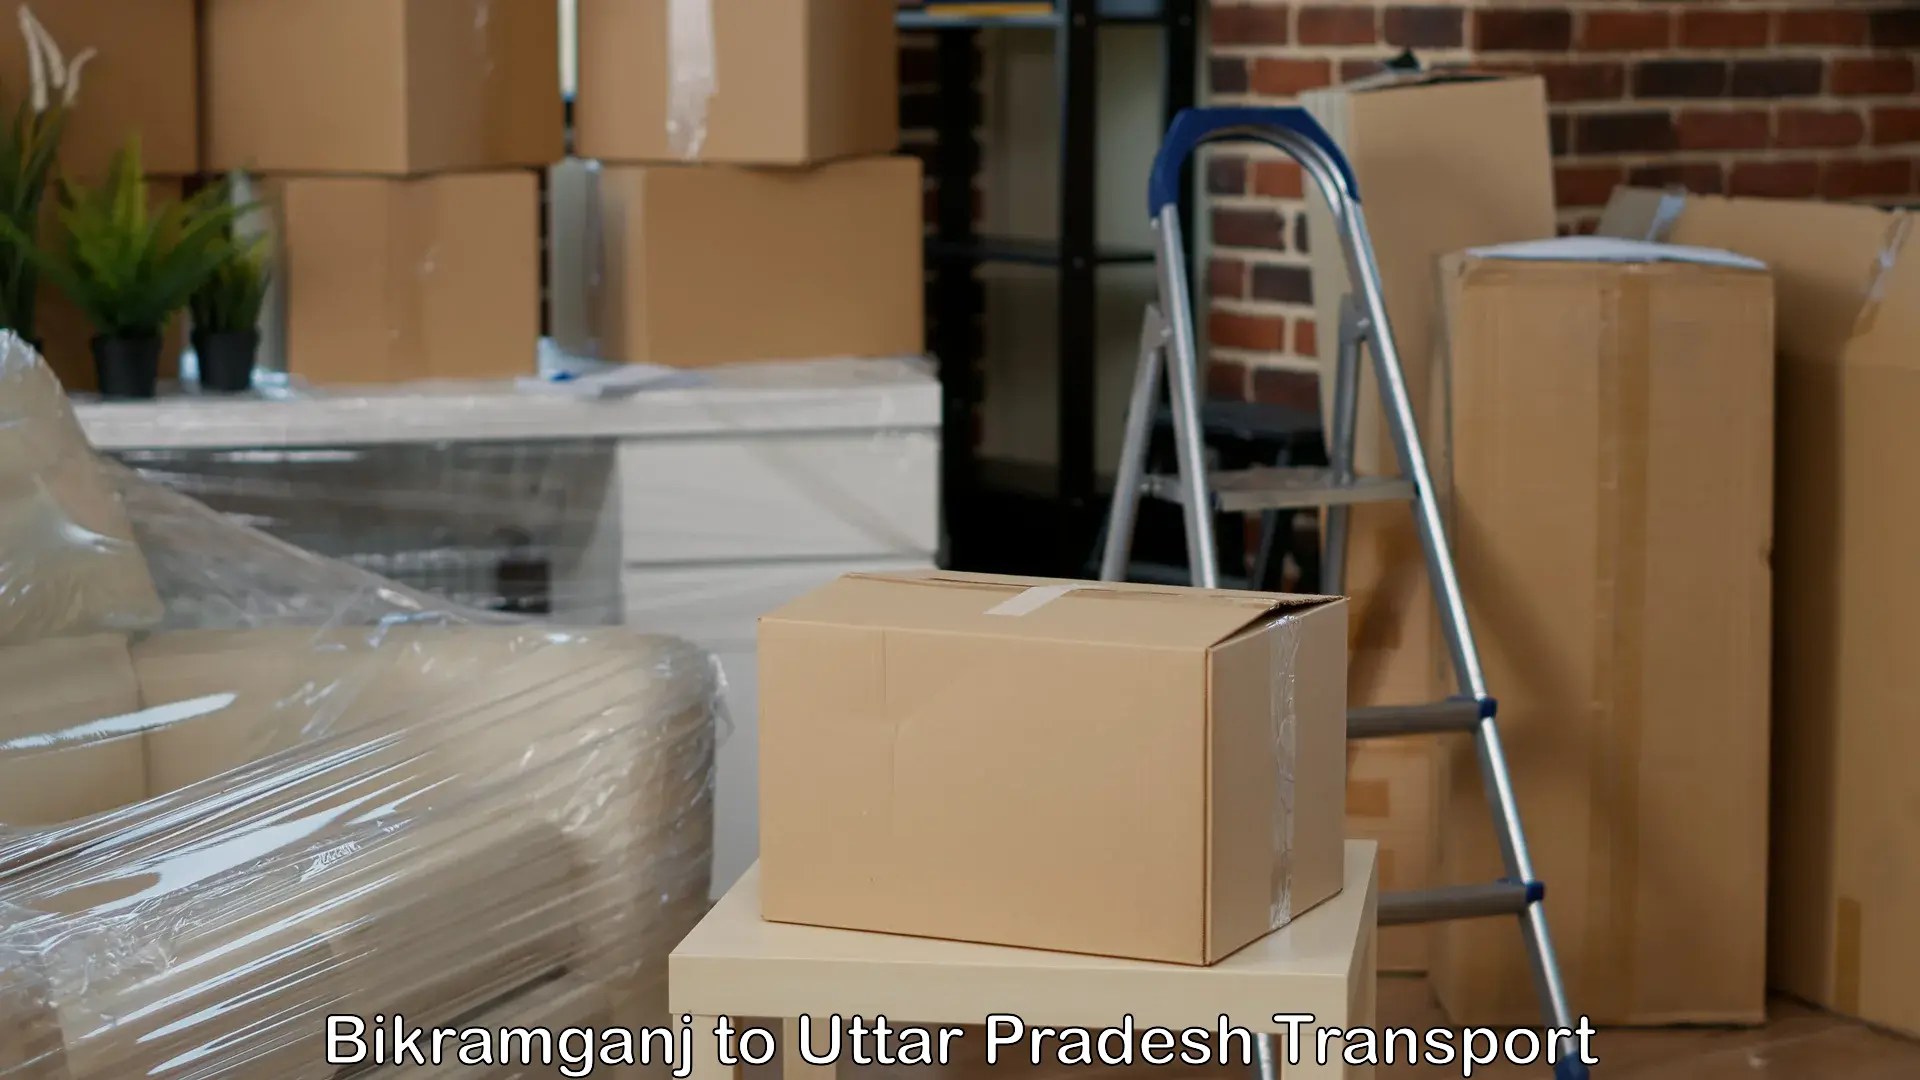 Truck transport companies in India Bikramganj to Koraon